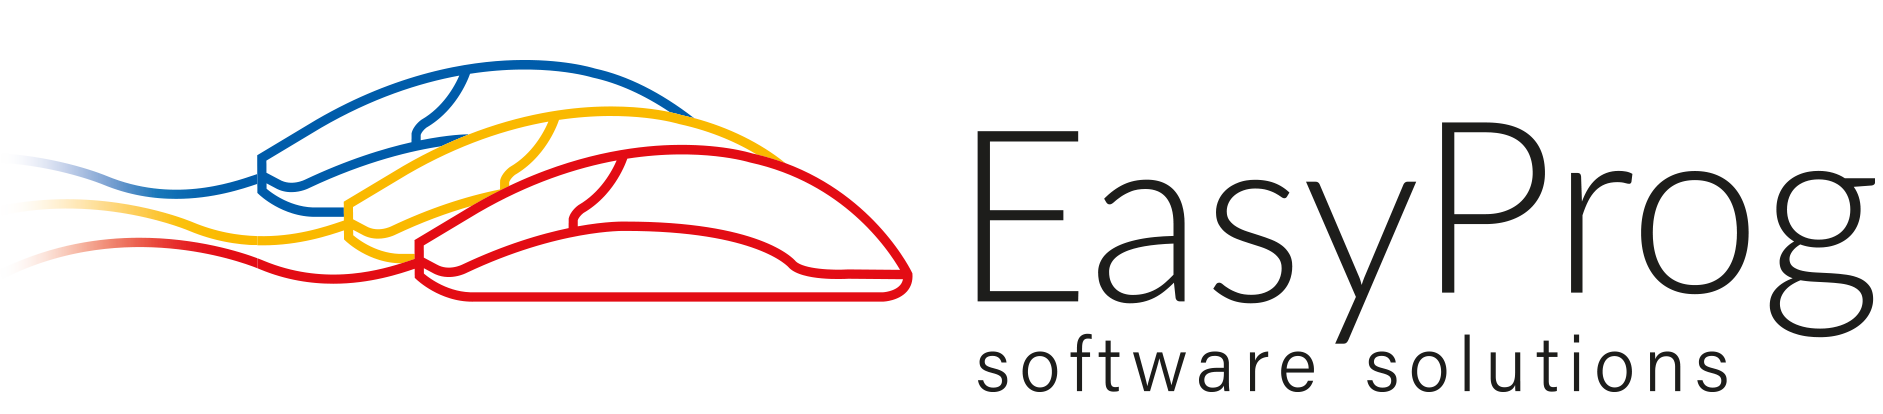 logo-easyprog